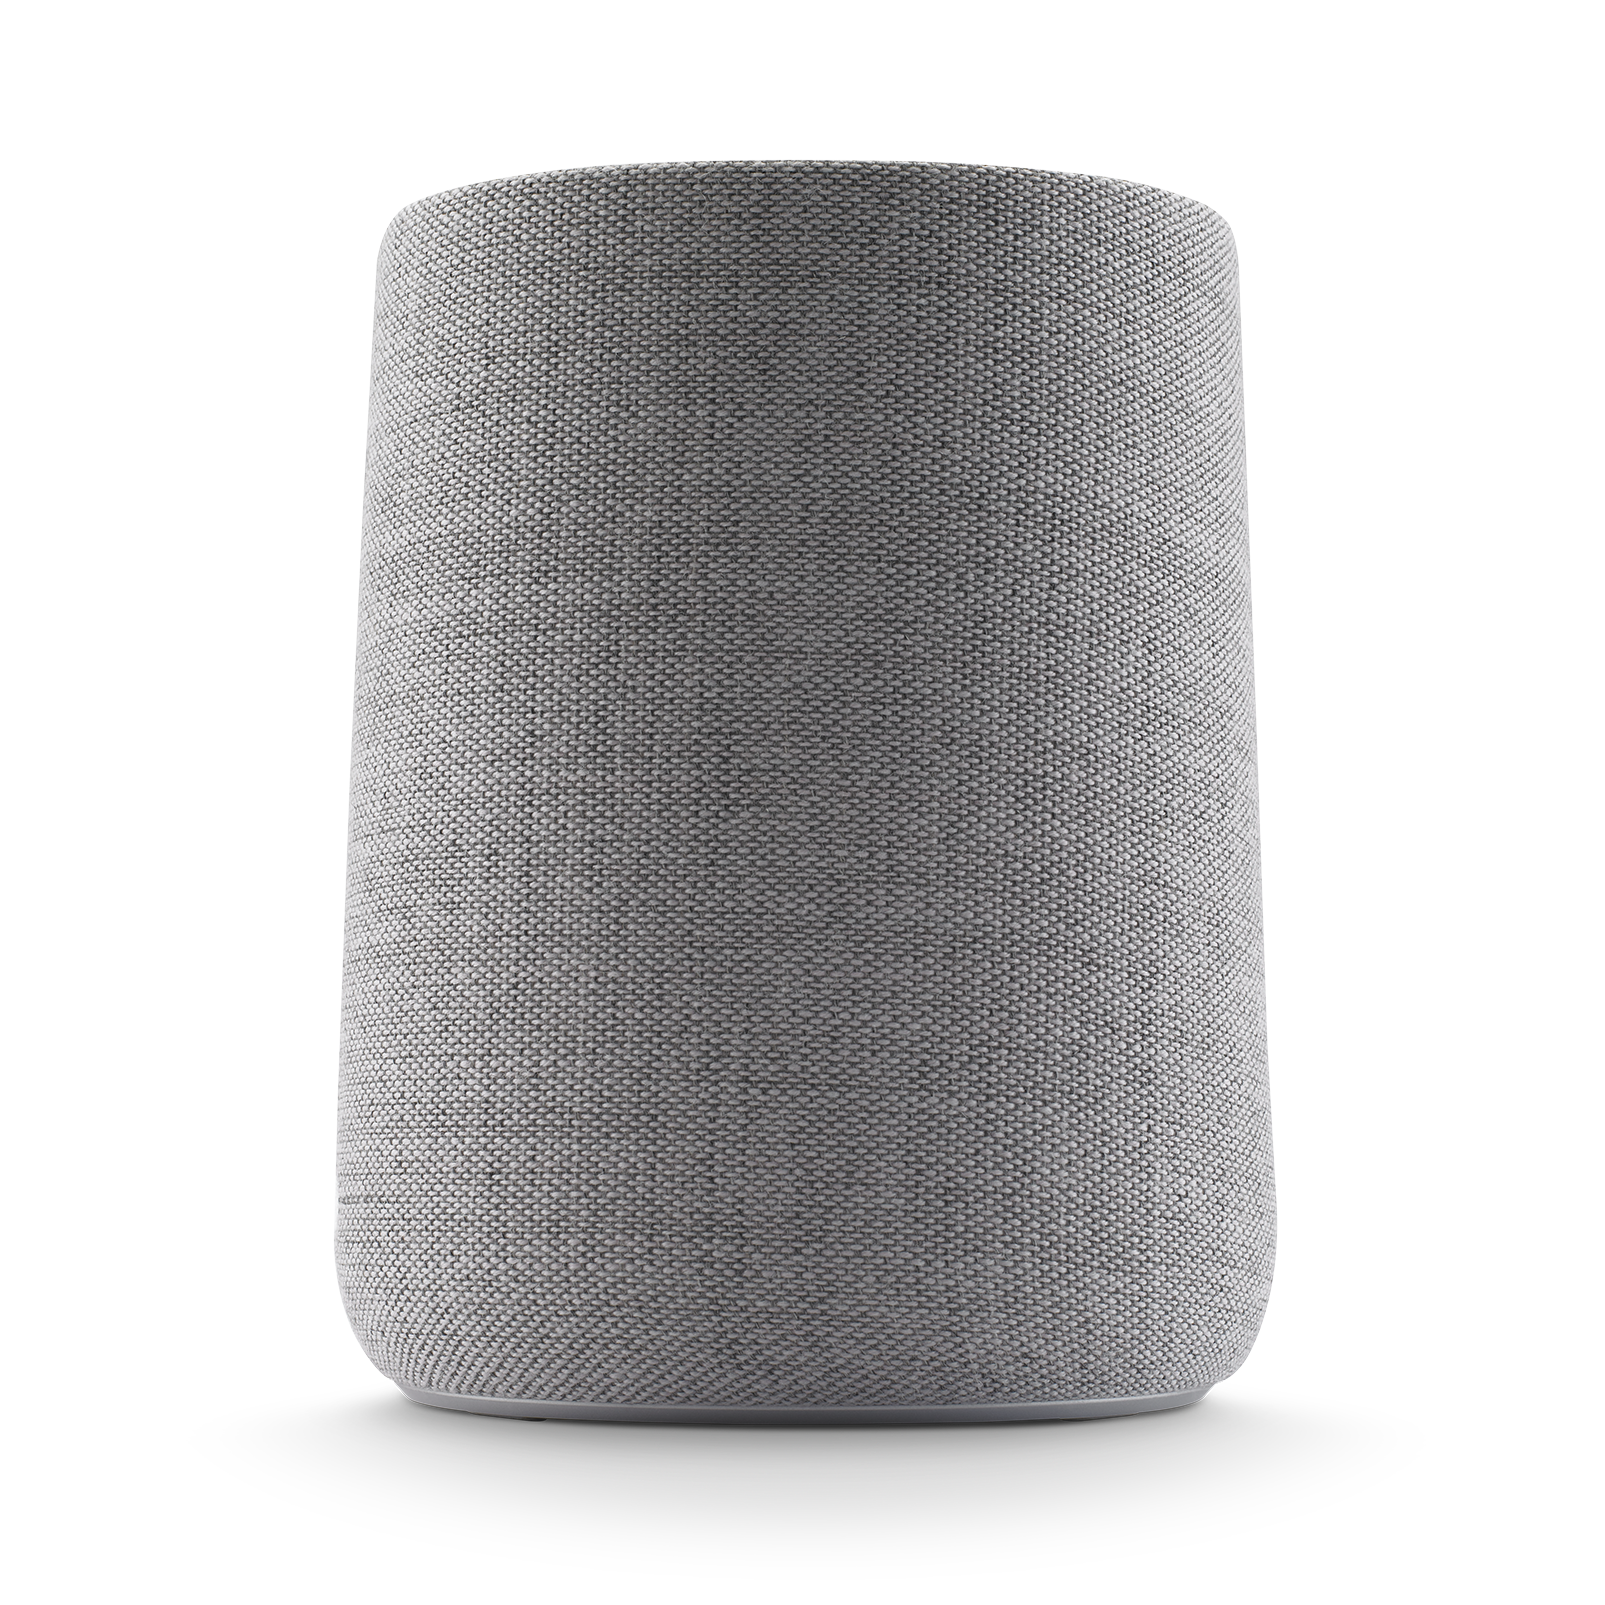 Harman Kardon Citation One MKII - Grey - All-in-one smart speaker with room-filling sound - Detailshot 1